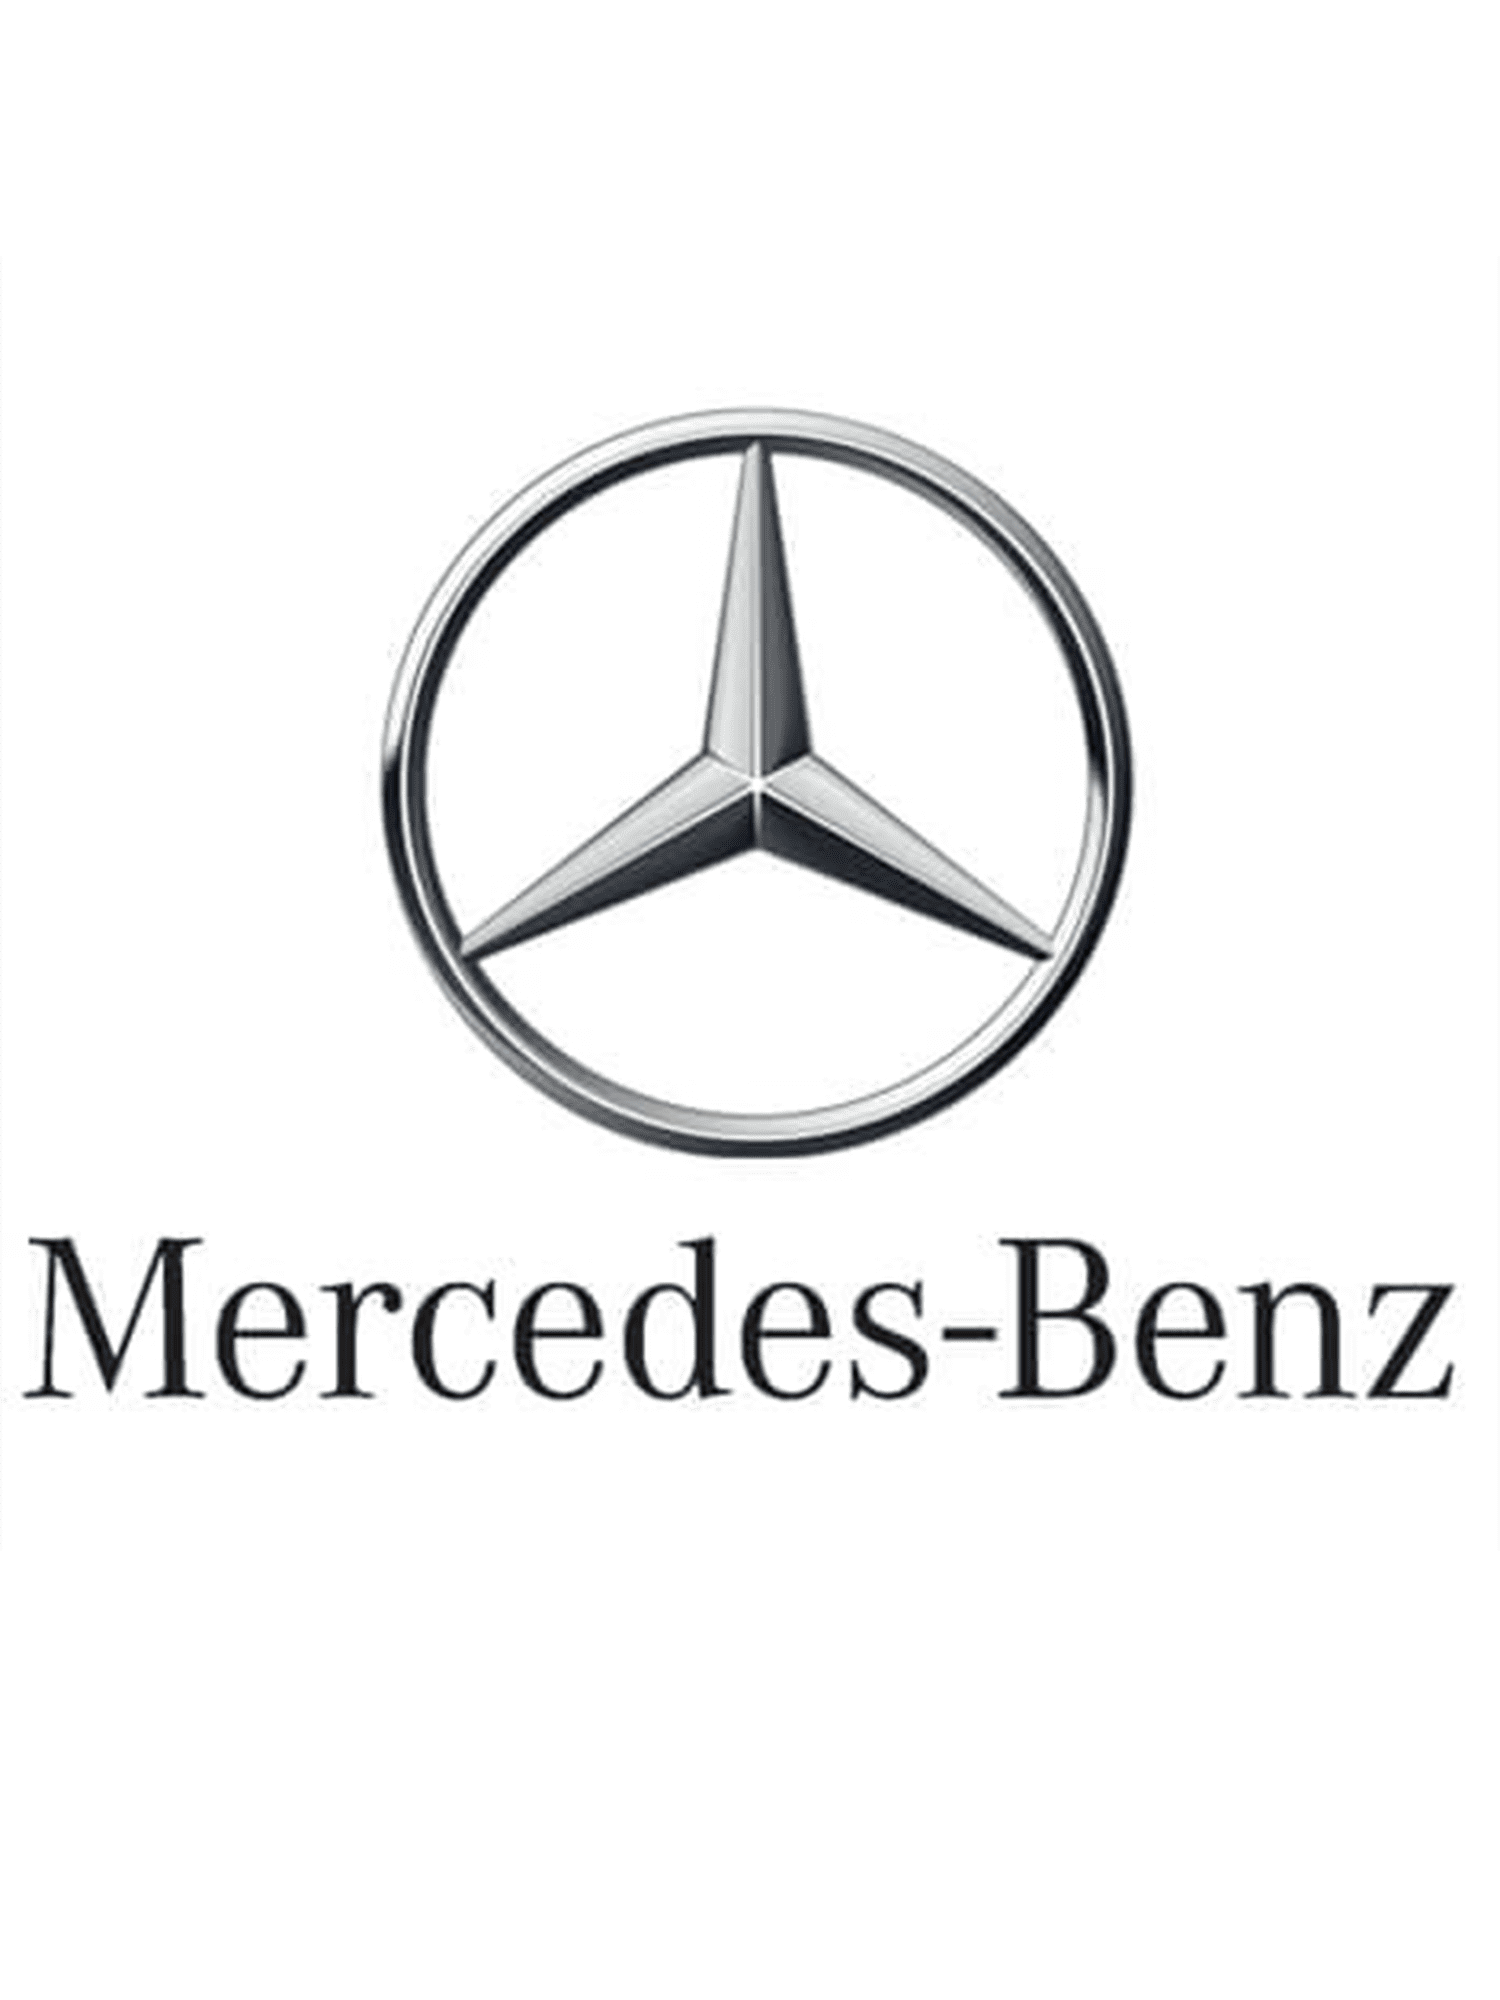 Ballucci Referenz Mercedes Logo